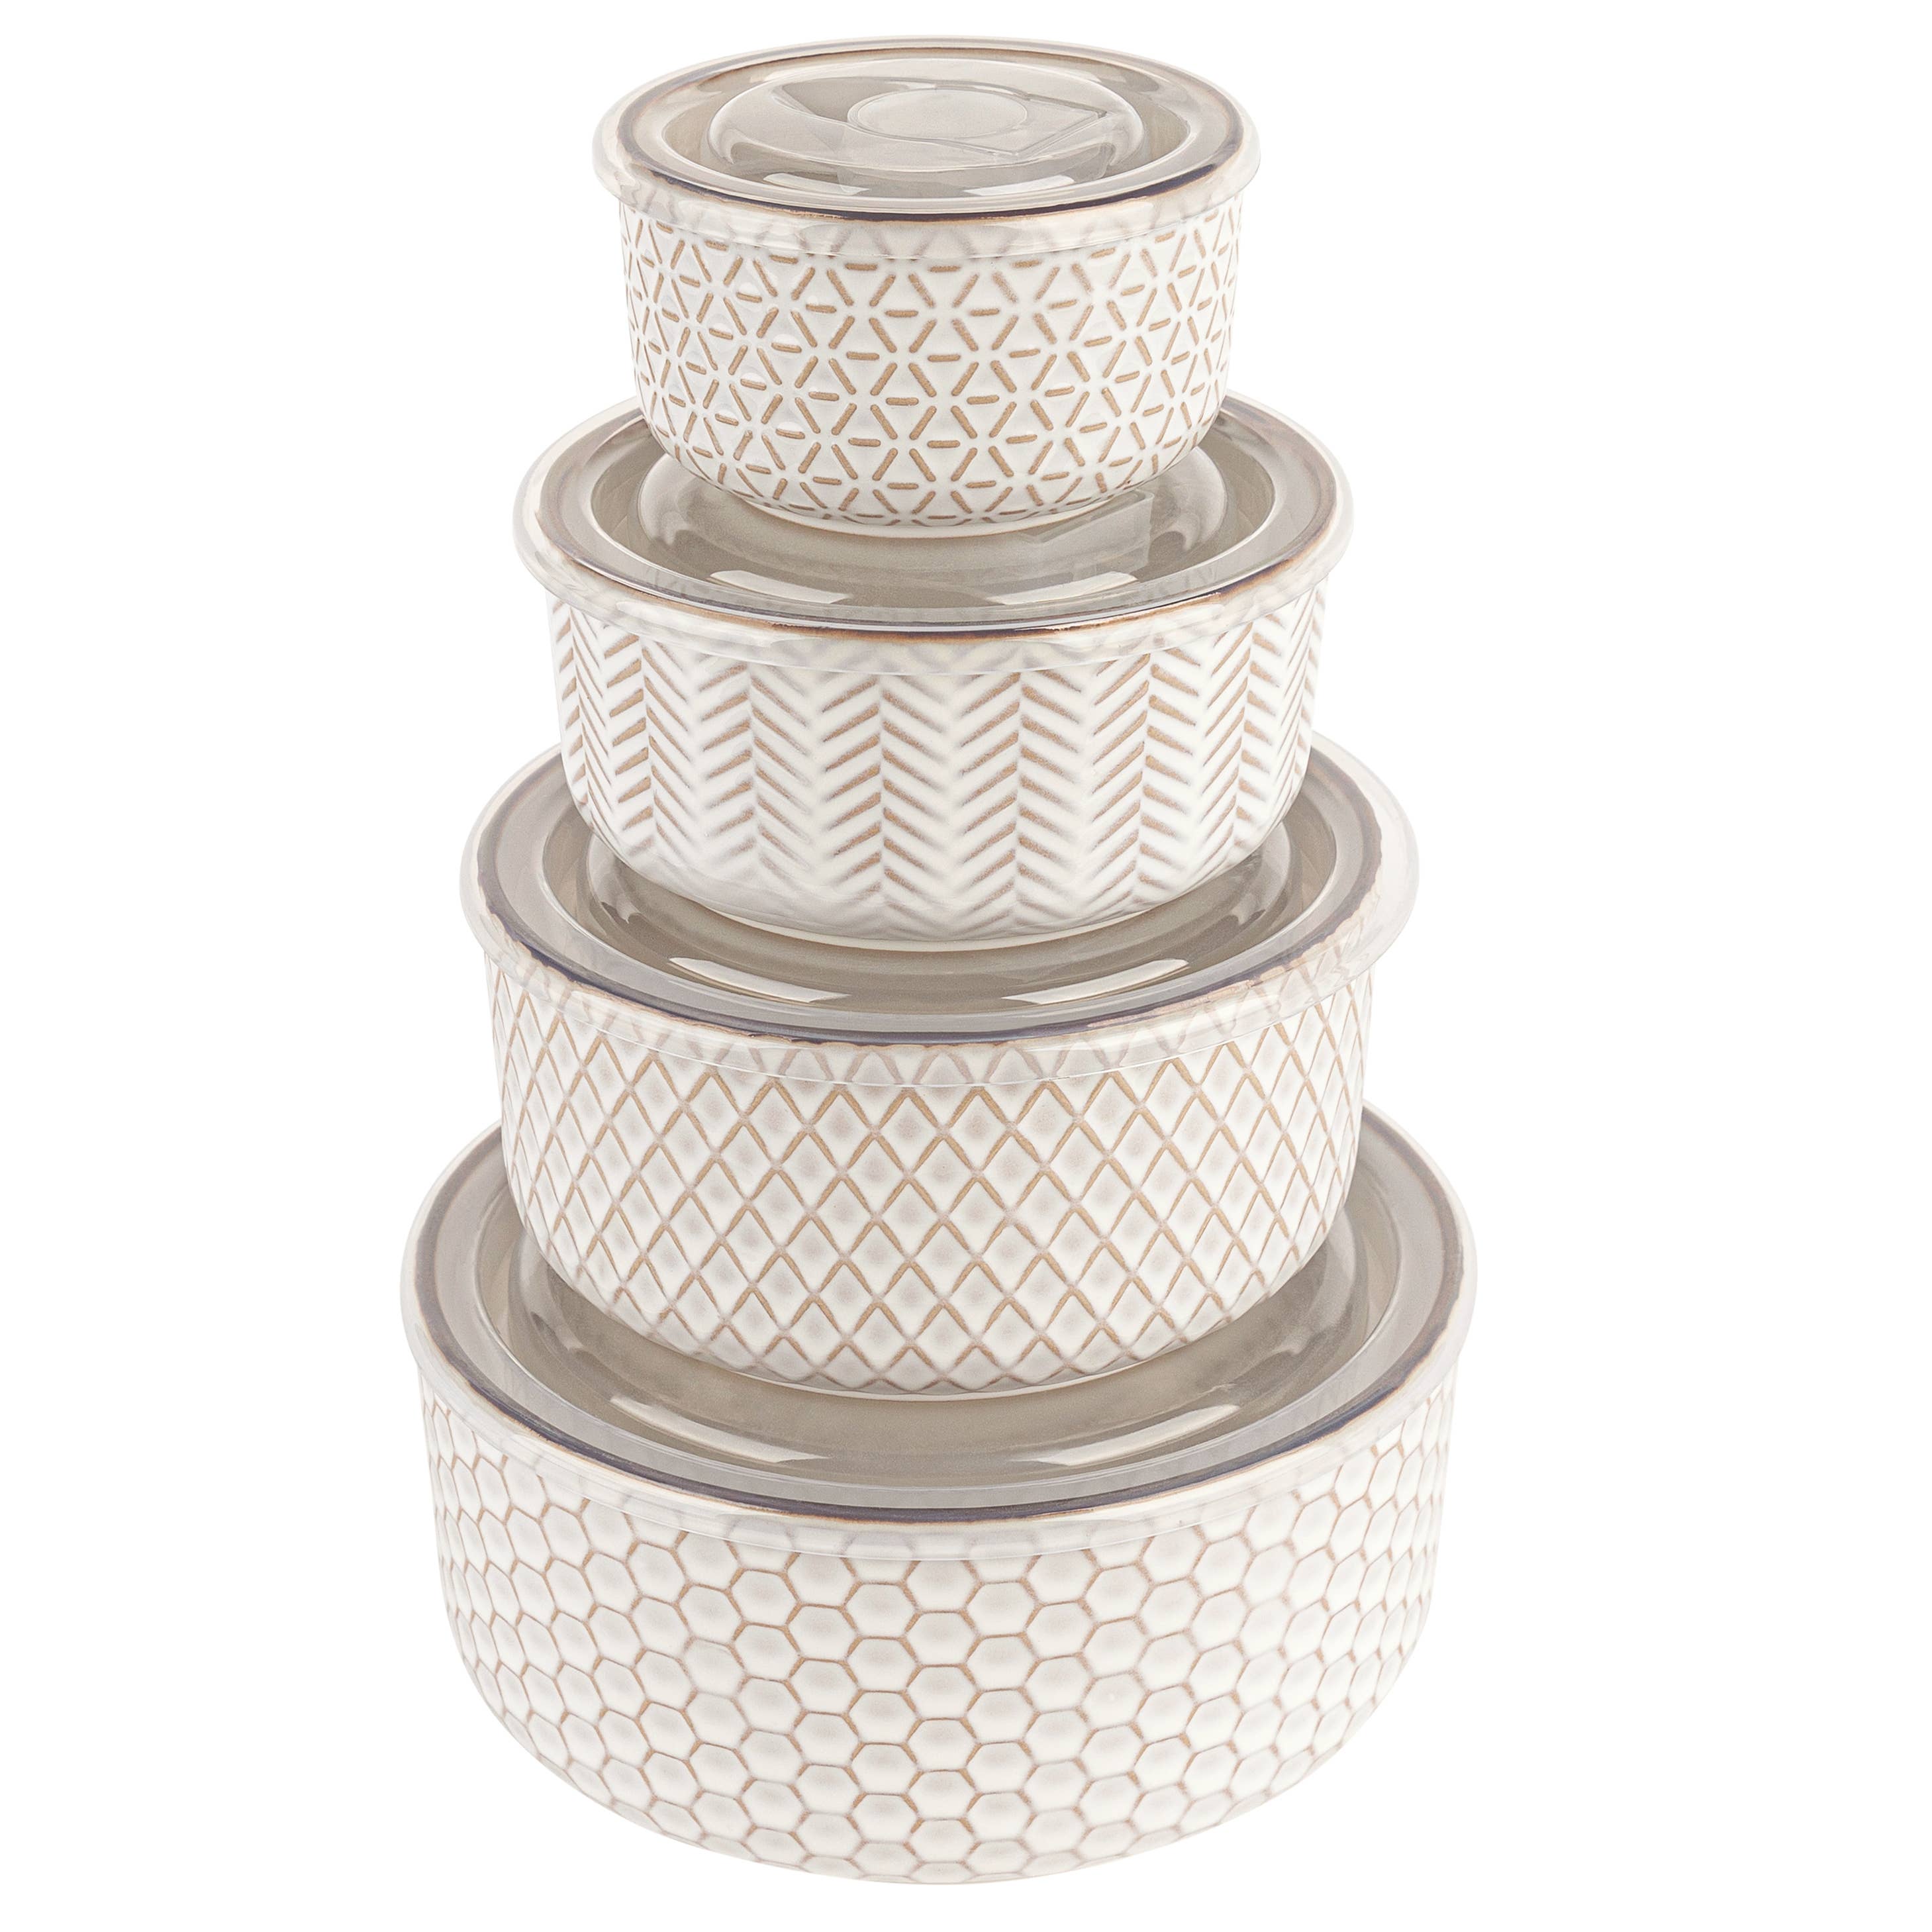 Ceramic Nesting Bowls with Lids, Set of 4,